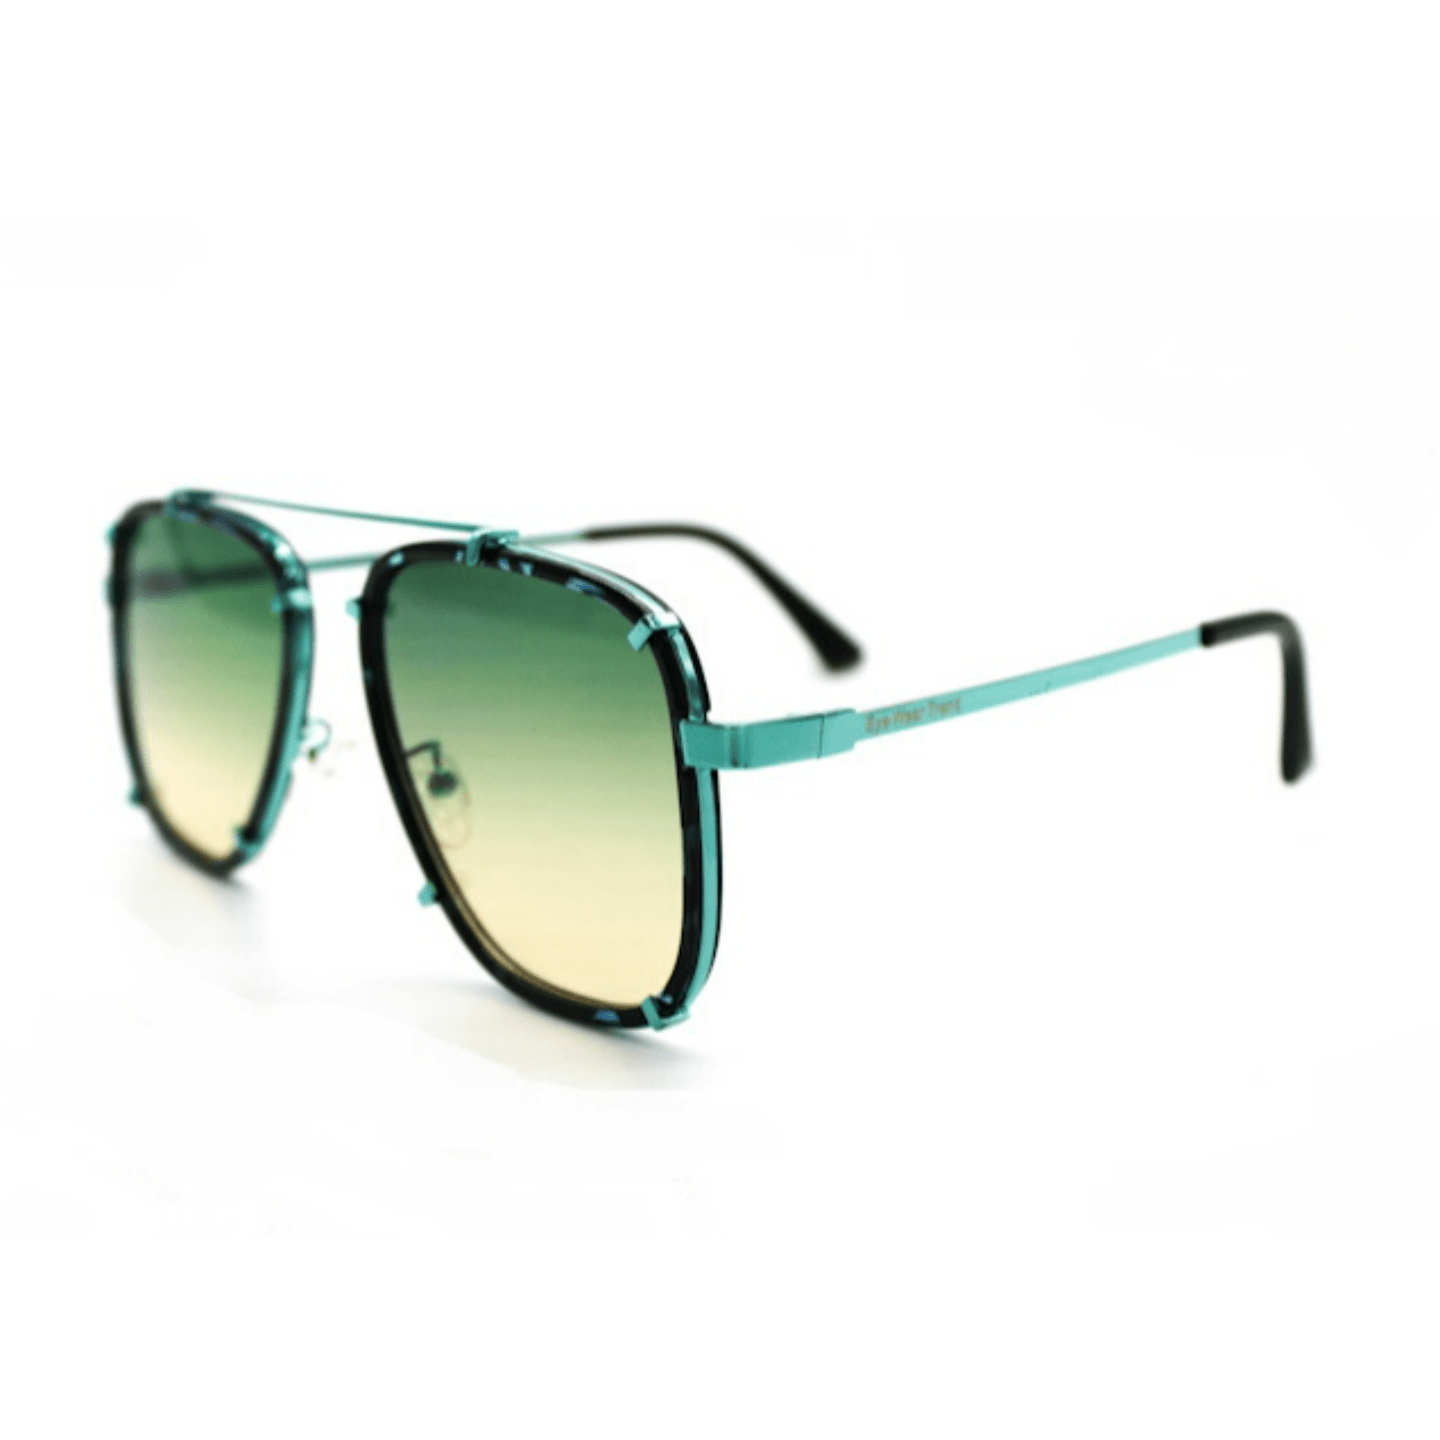 Peacock Green Sunglasses